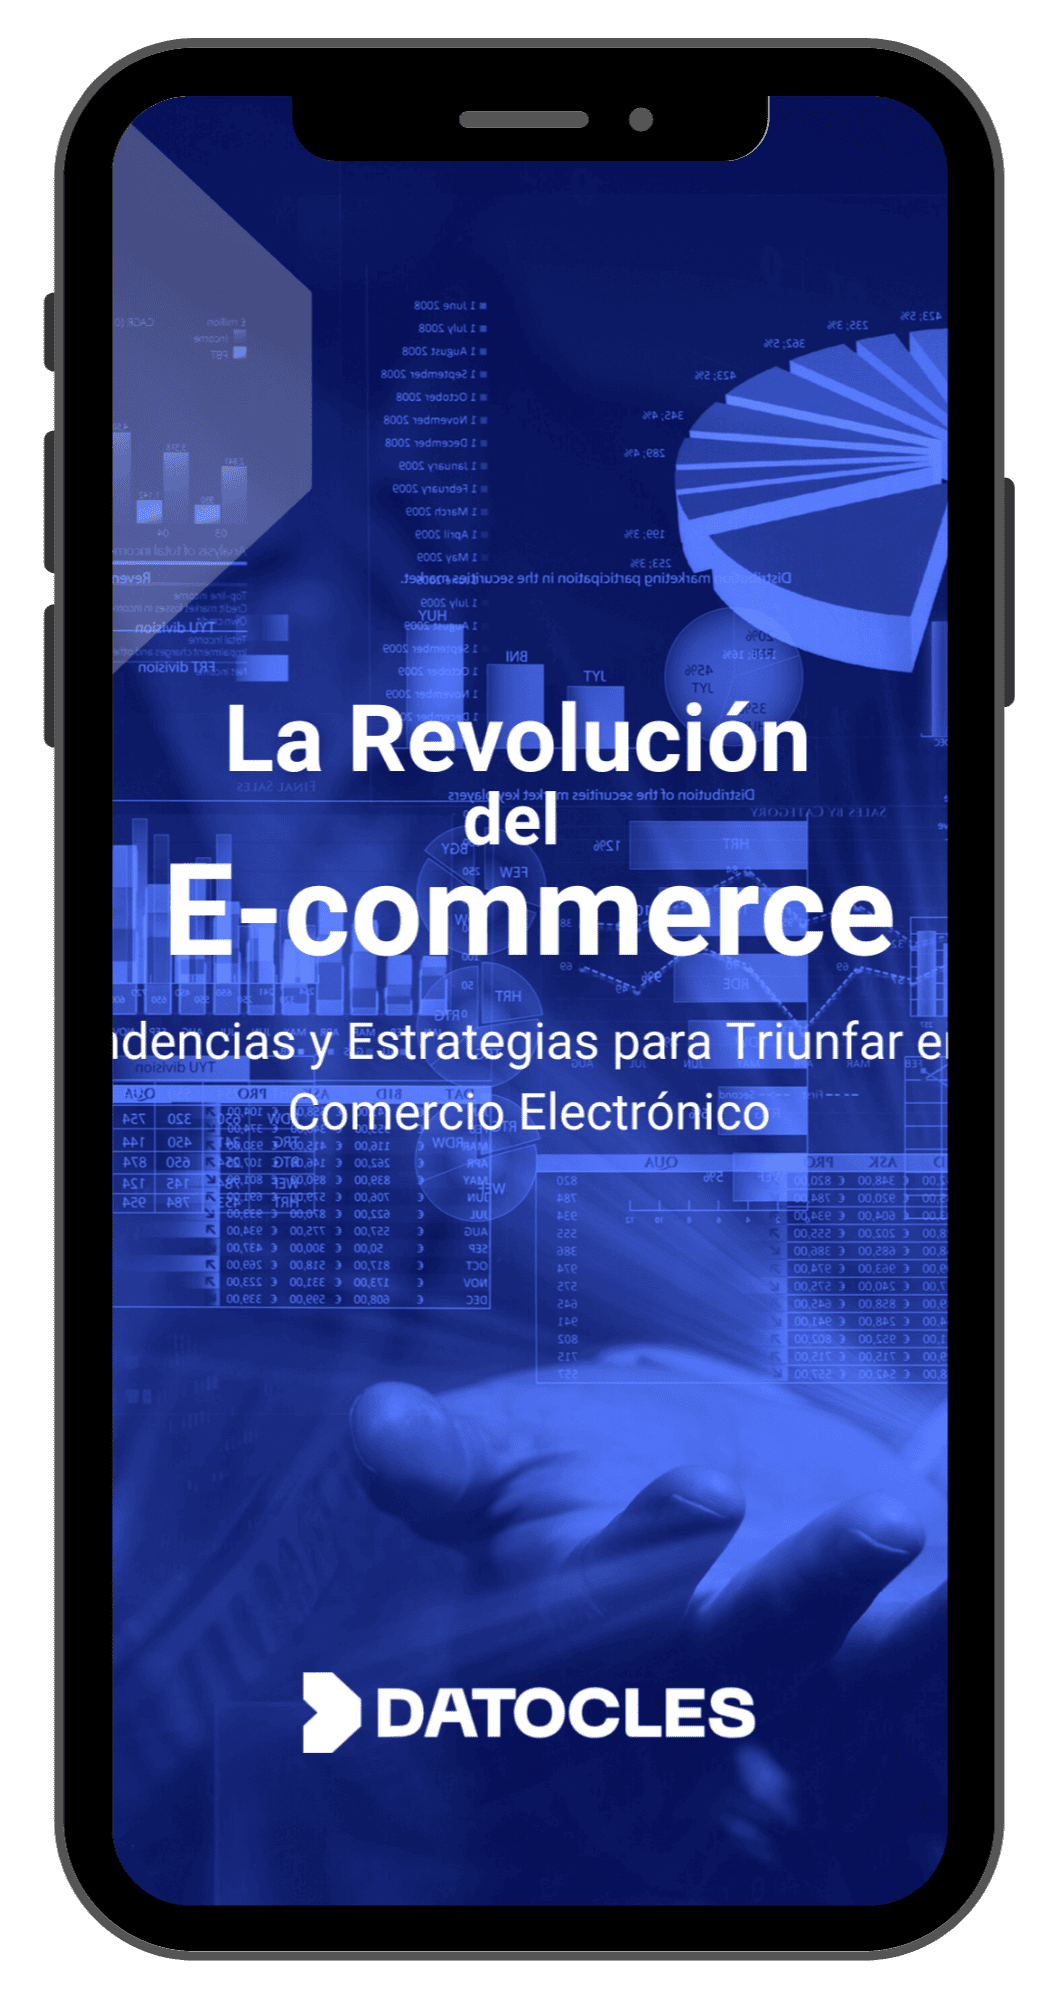 La revolución del E-commerce